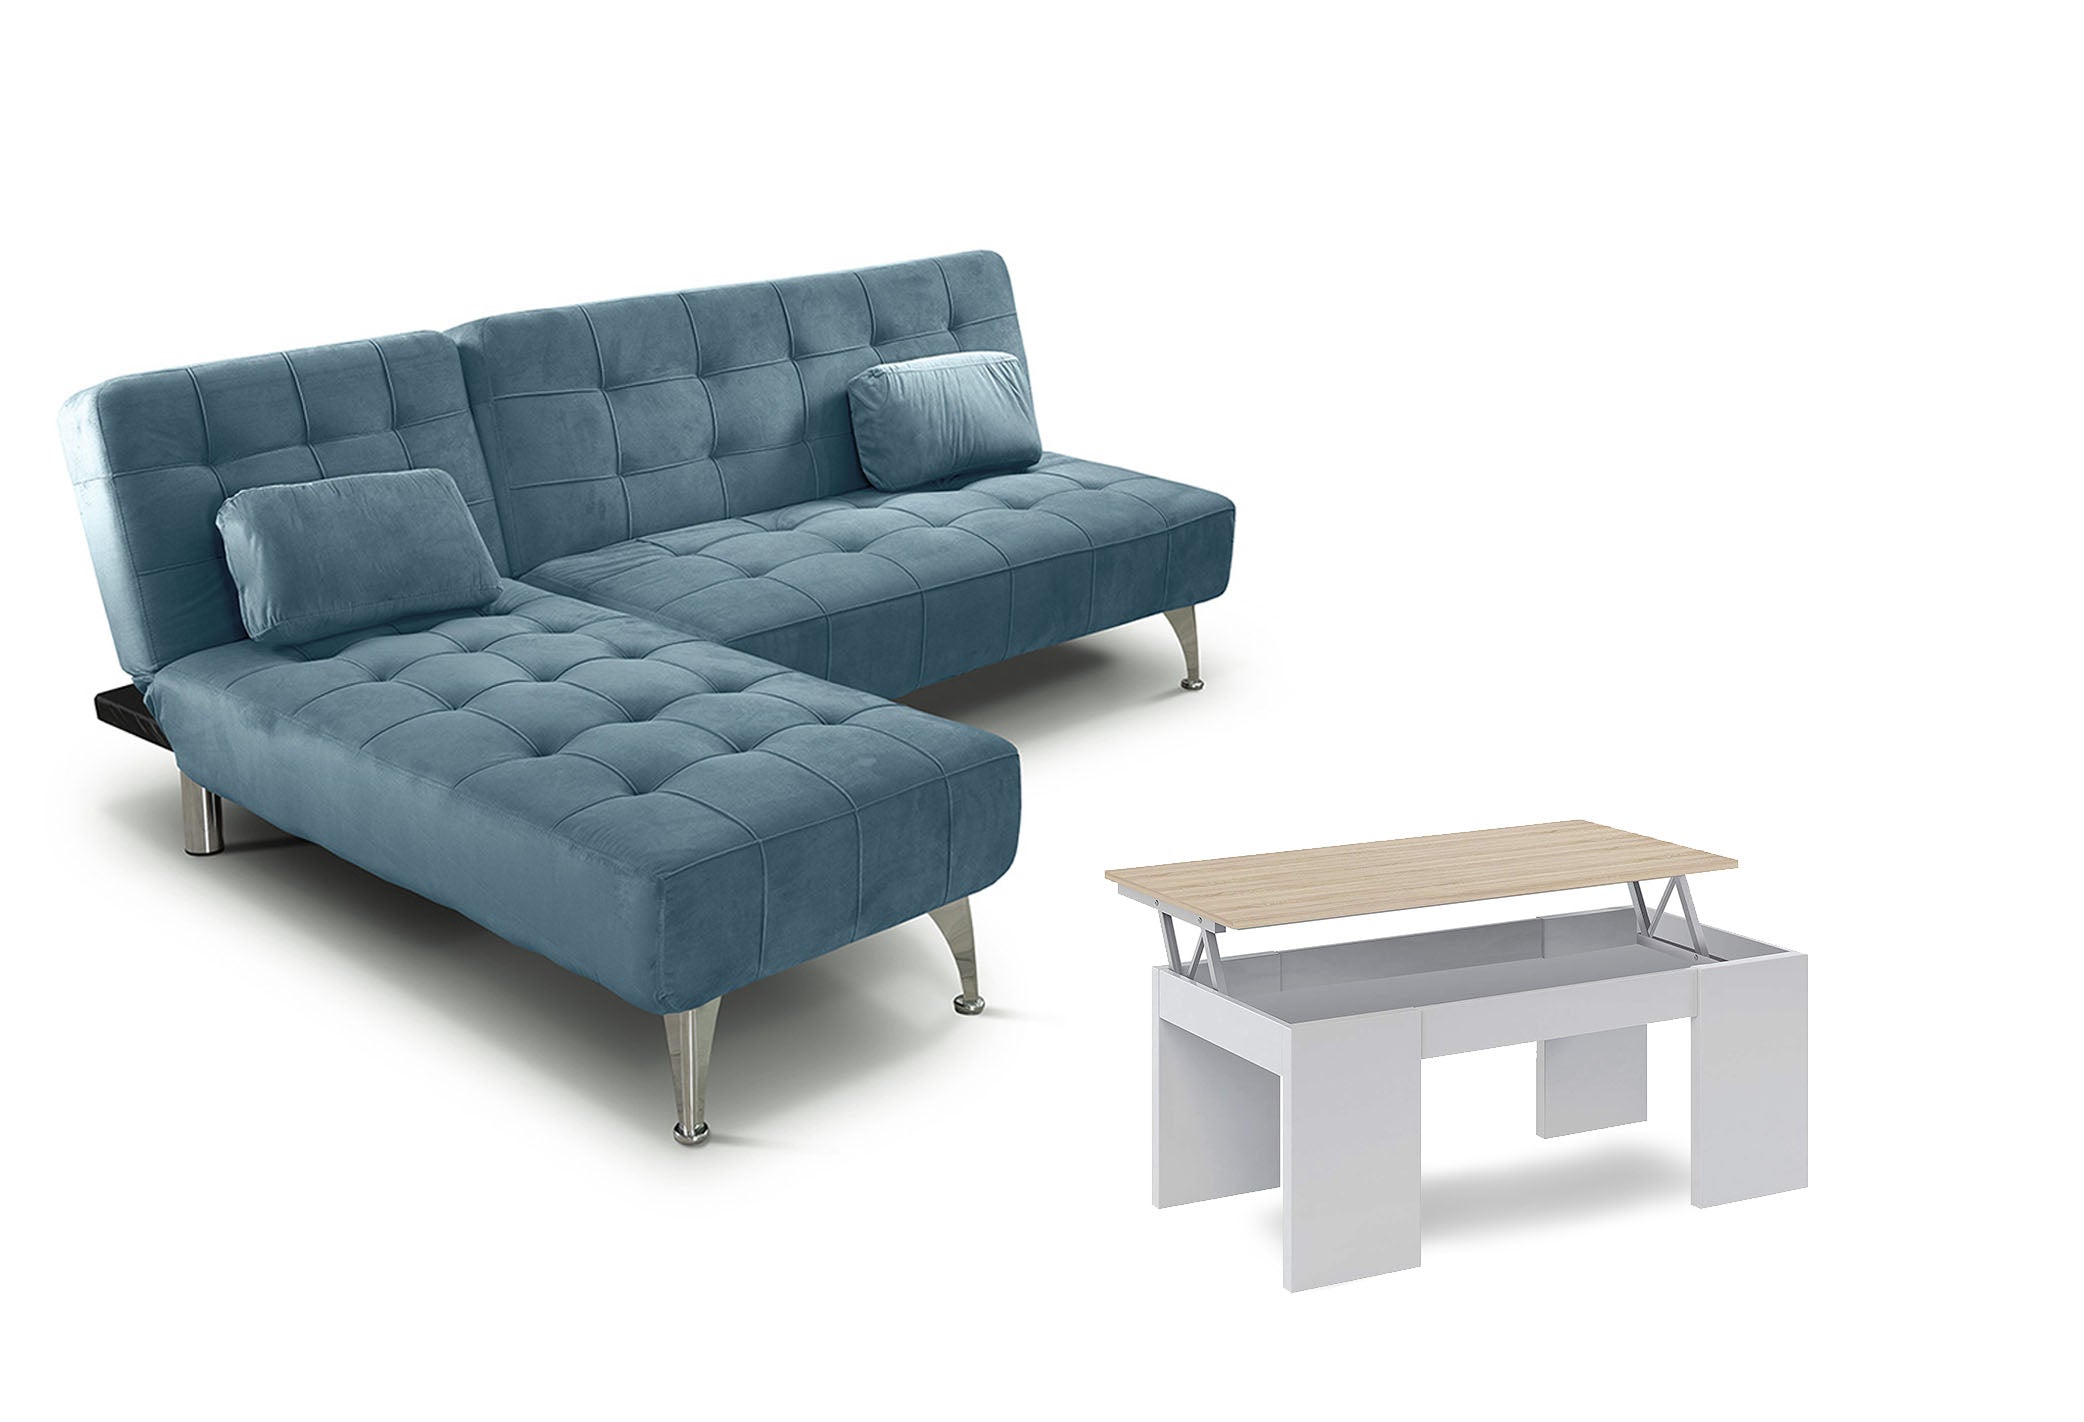 Oferta: Sofa Cama Chaise Longue XS + Mesa de Centro Elevable